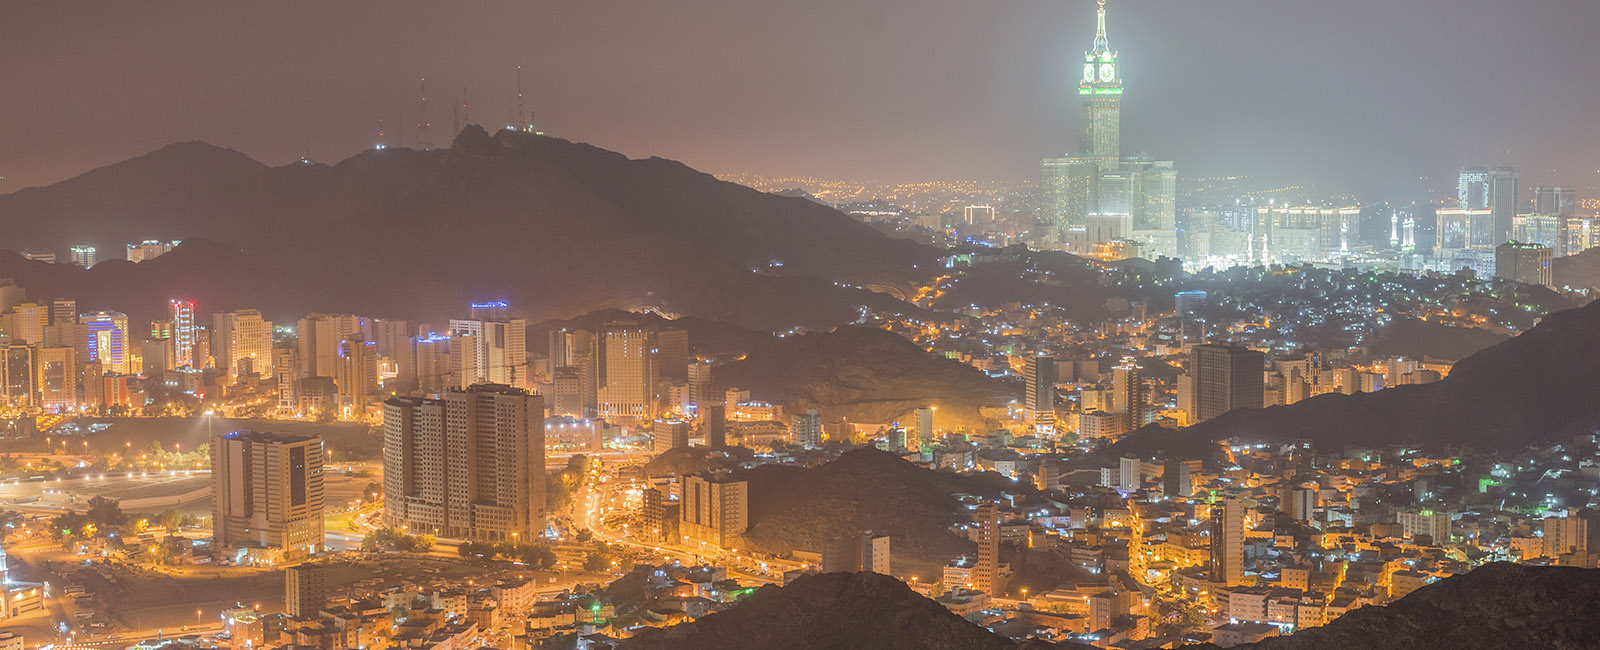 View of Mecca City in Saudi Arabia